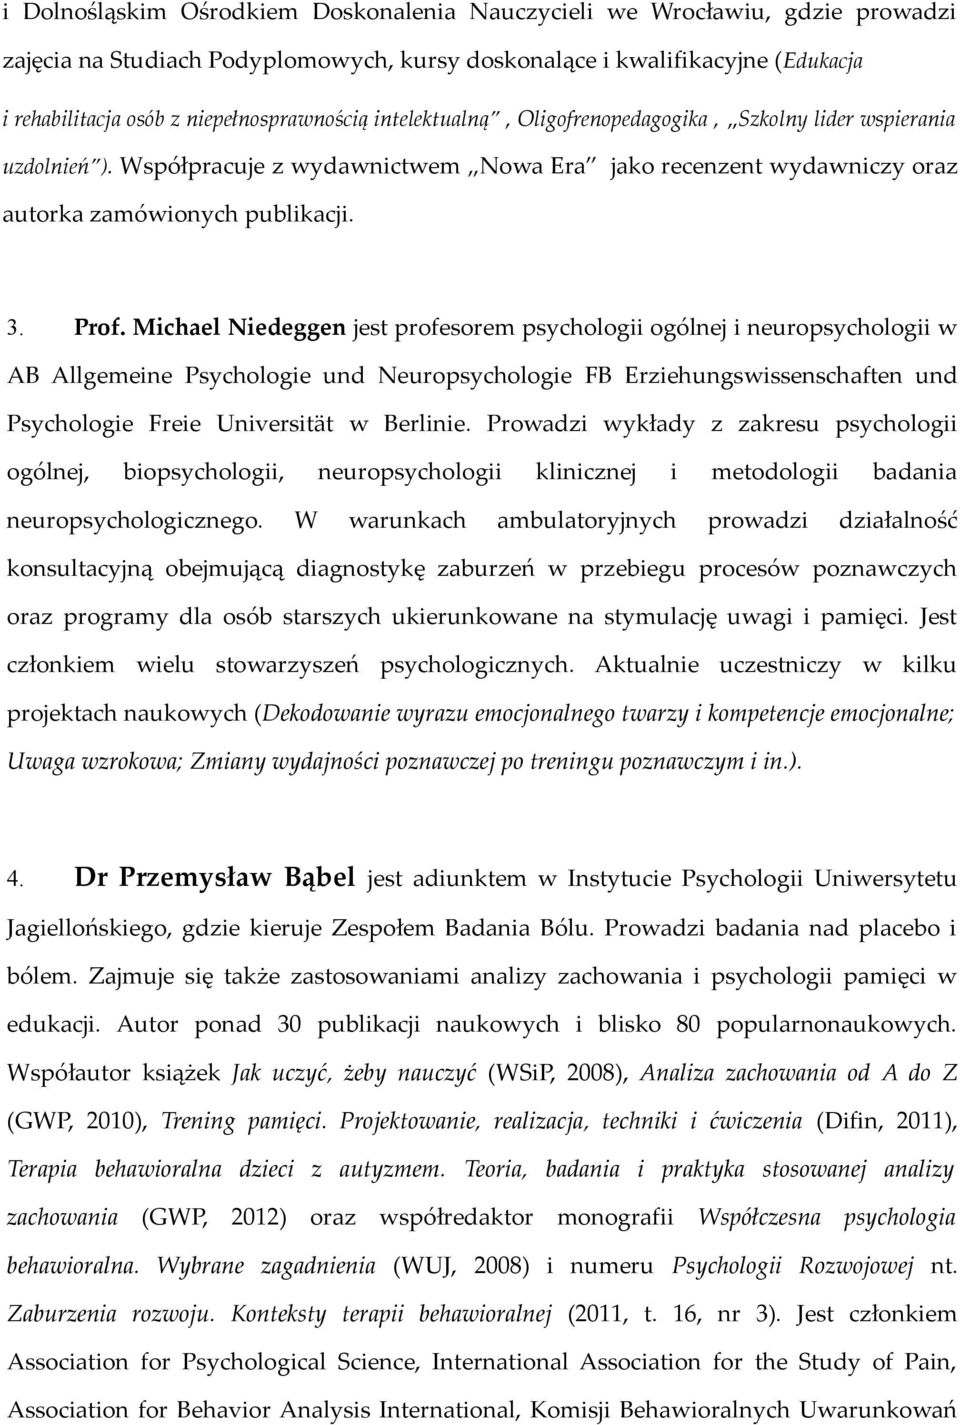 Prof. Michael Niedeggen jest profesorem psychologii ogólnej i neuropsychologii w AB Allgemeine Psychologie und Neuropsychologie FB Erziehungswissenschaften und Psychologie Freie Universität w